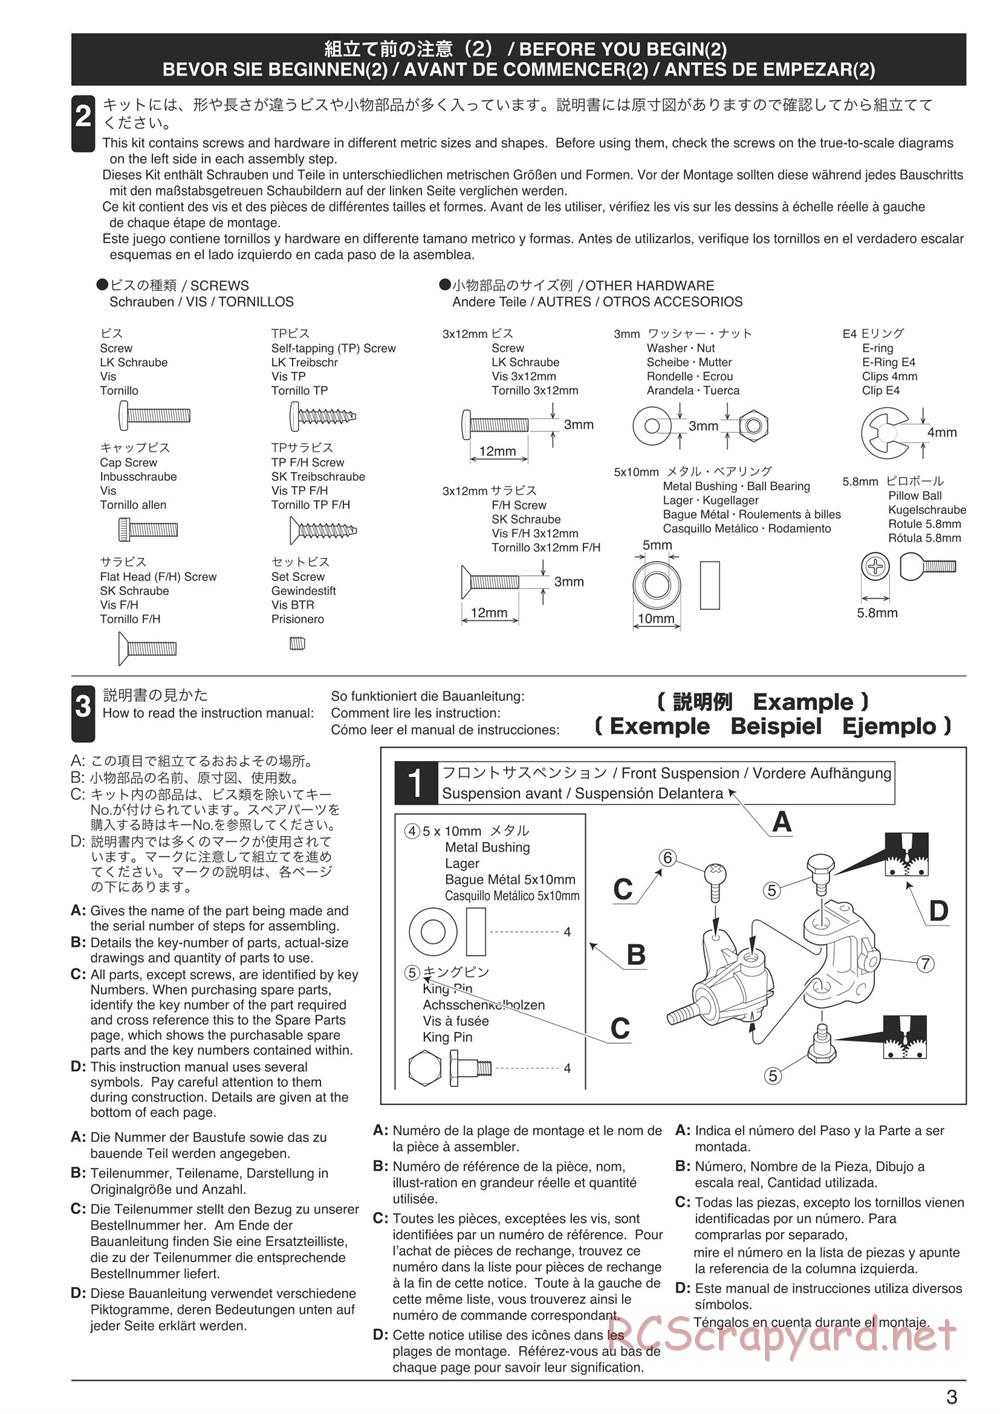 Kyosho - DMT VE-R - Manual - Page 3